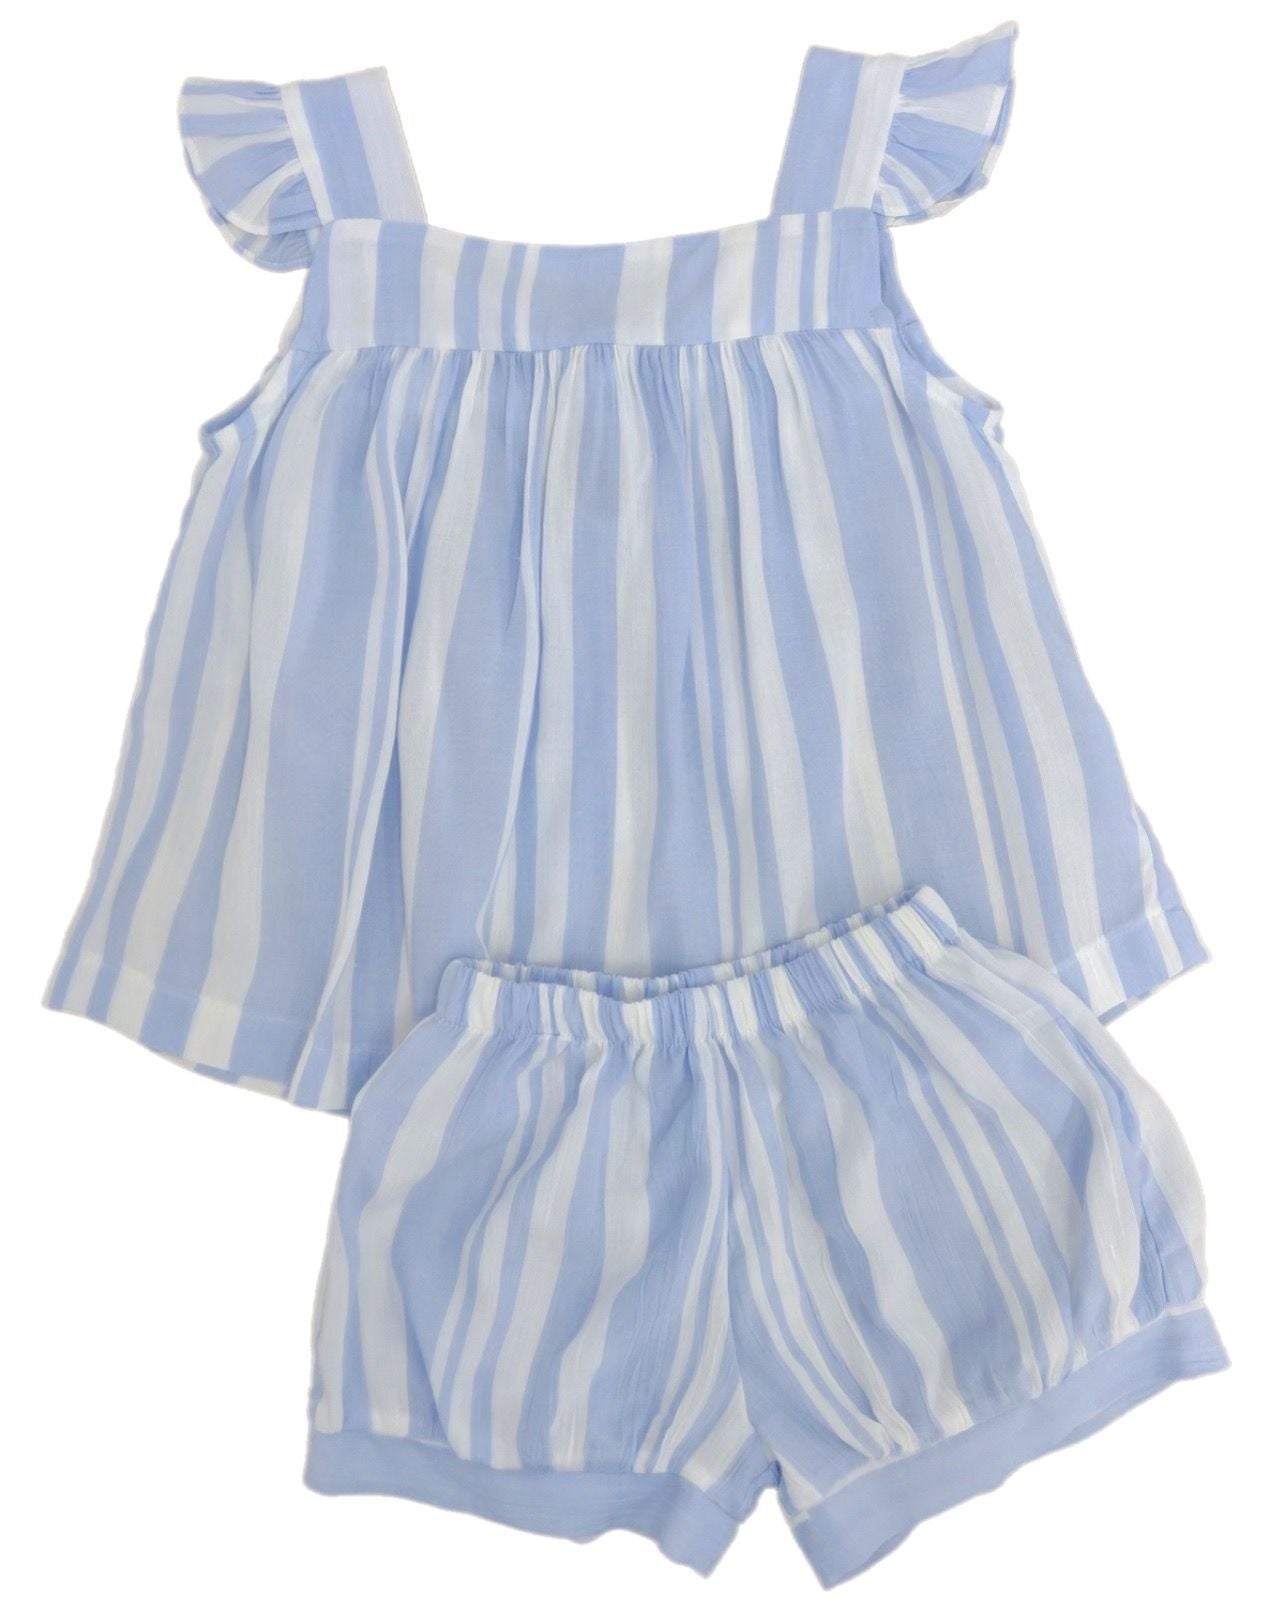 Mary Banded Short Set - Blue Stripe - Breckenridge Baby